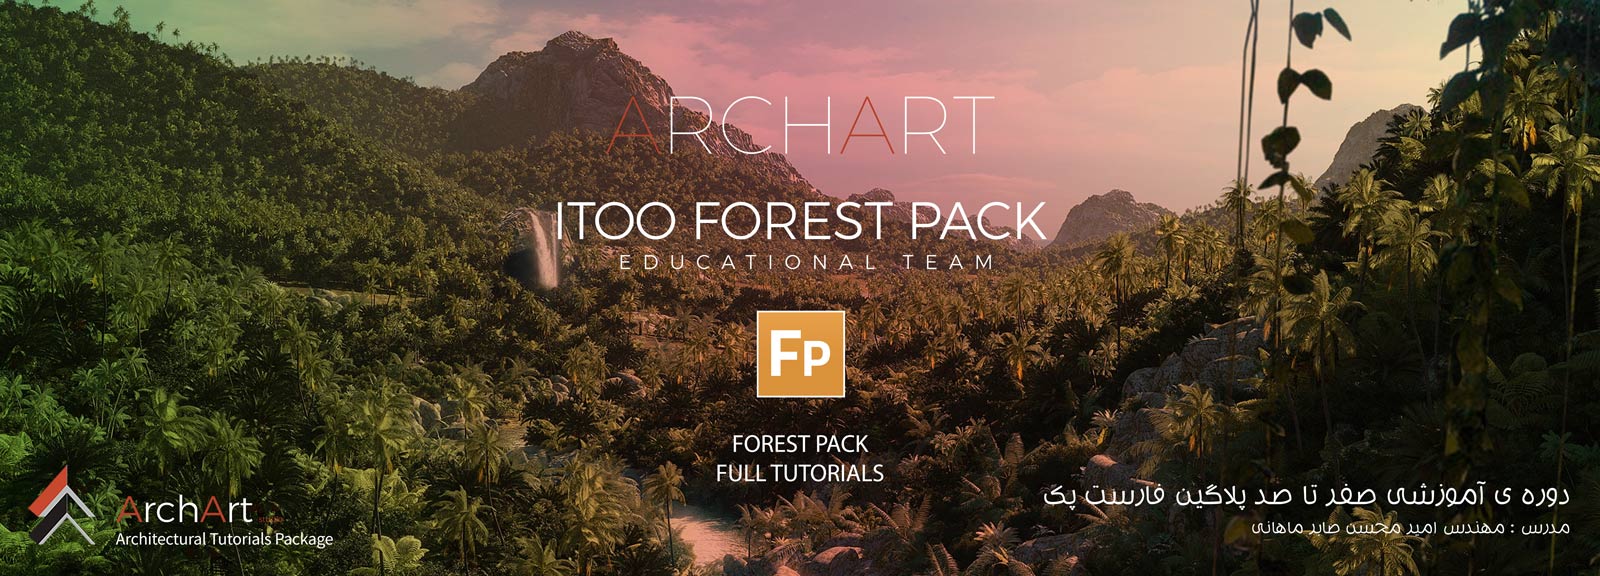 جلسه ی دوم پلاگین فارست پک - Itoo Forest Pack